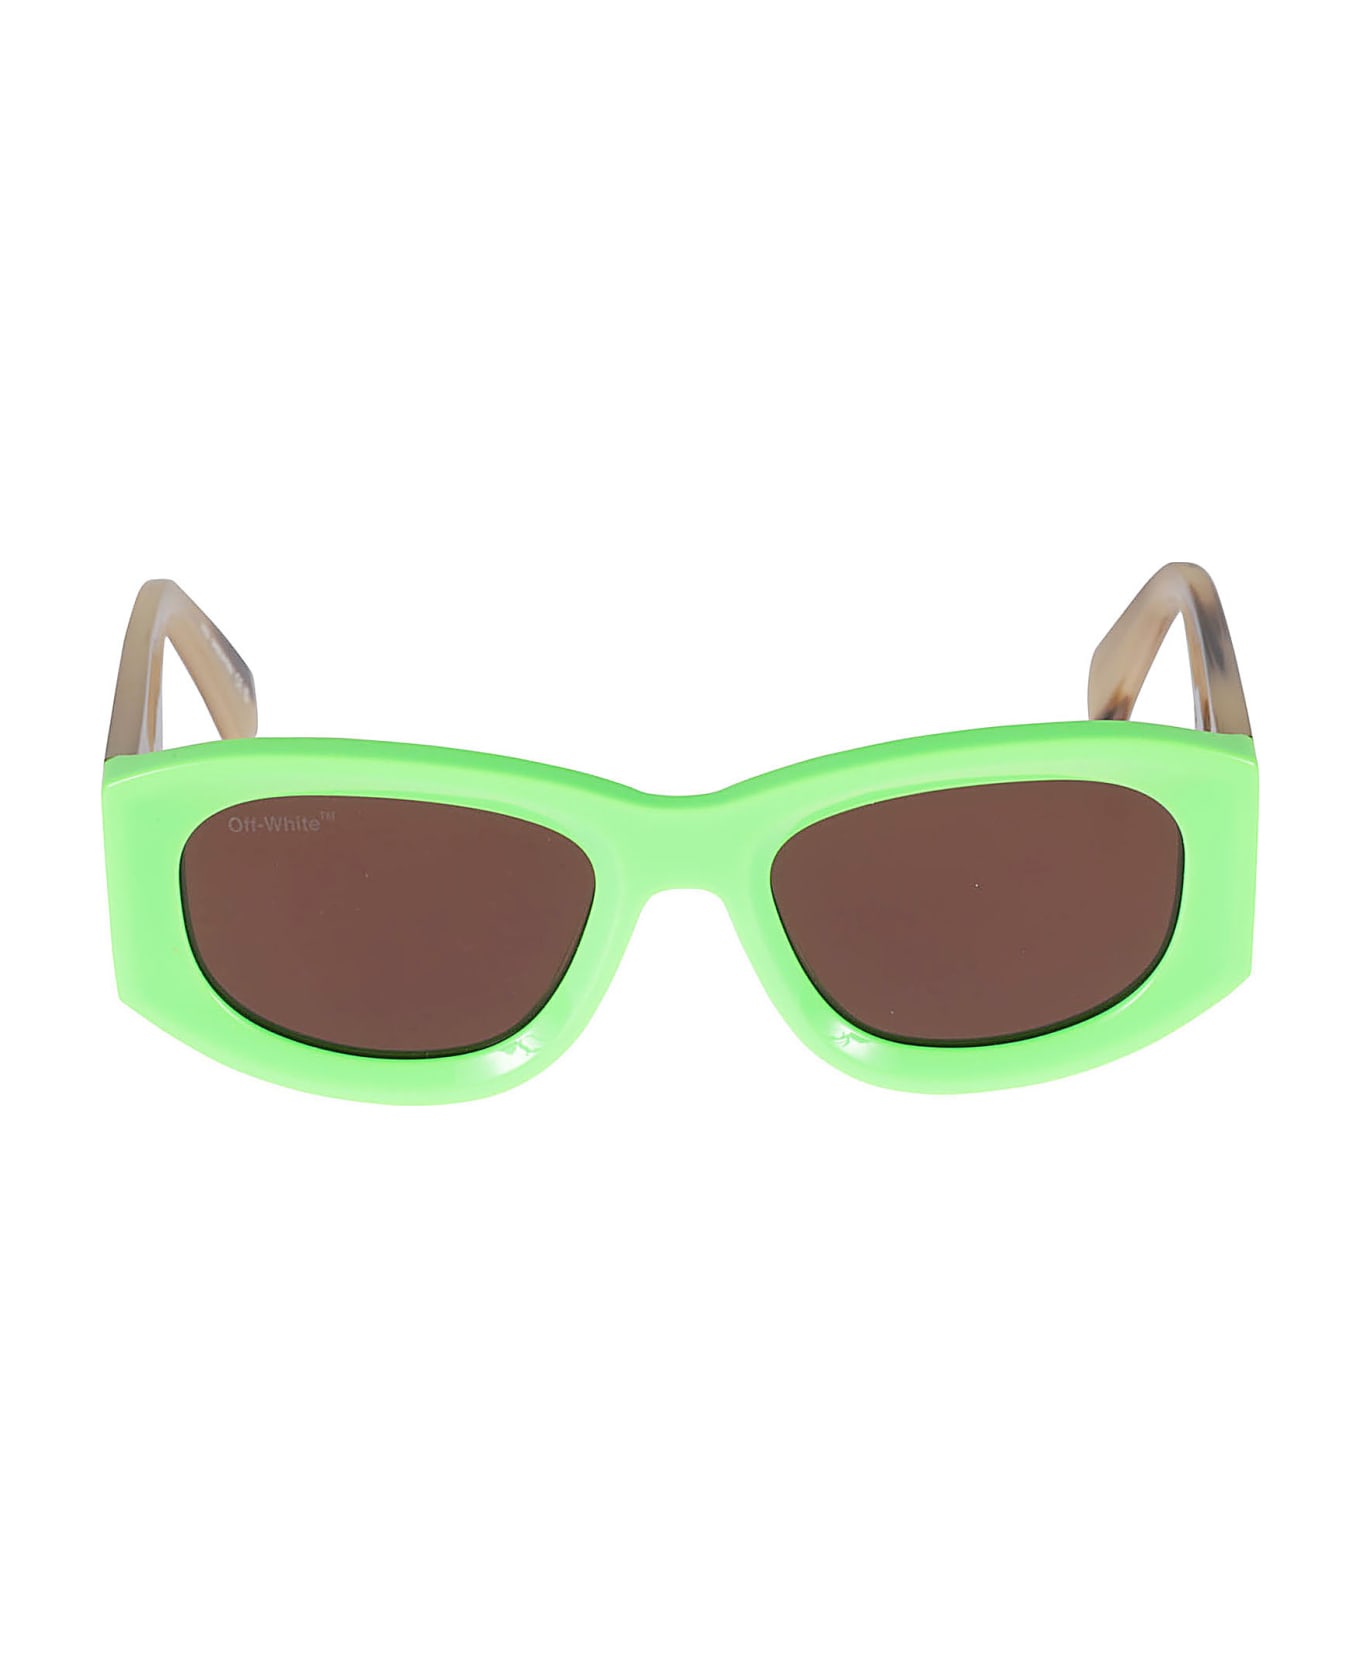 Off-White Joan Sunglasses - Green サングラス